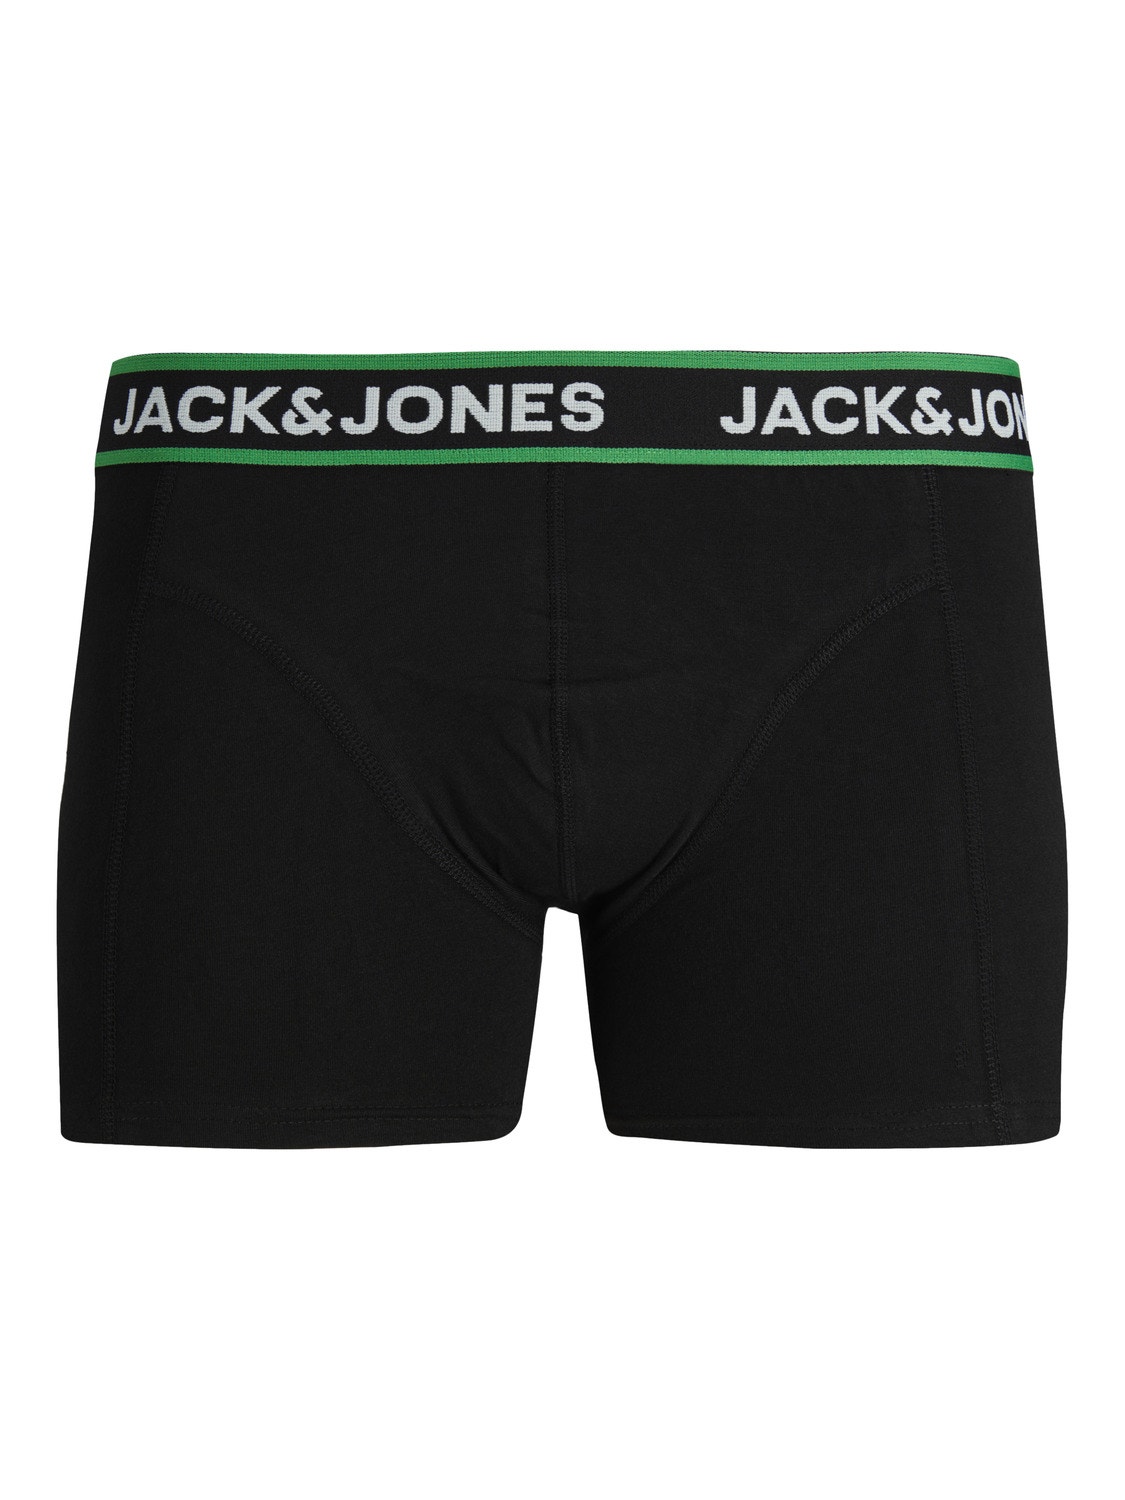 Jack & Jones 3er-pack Boxershorts Für jungs -Black - 12253234